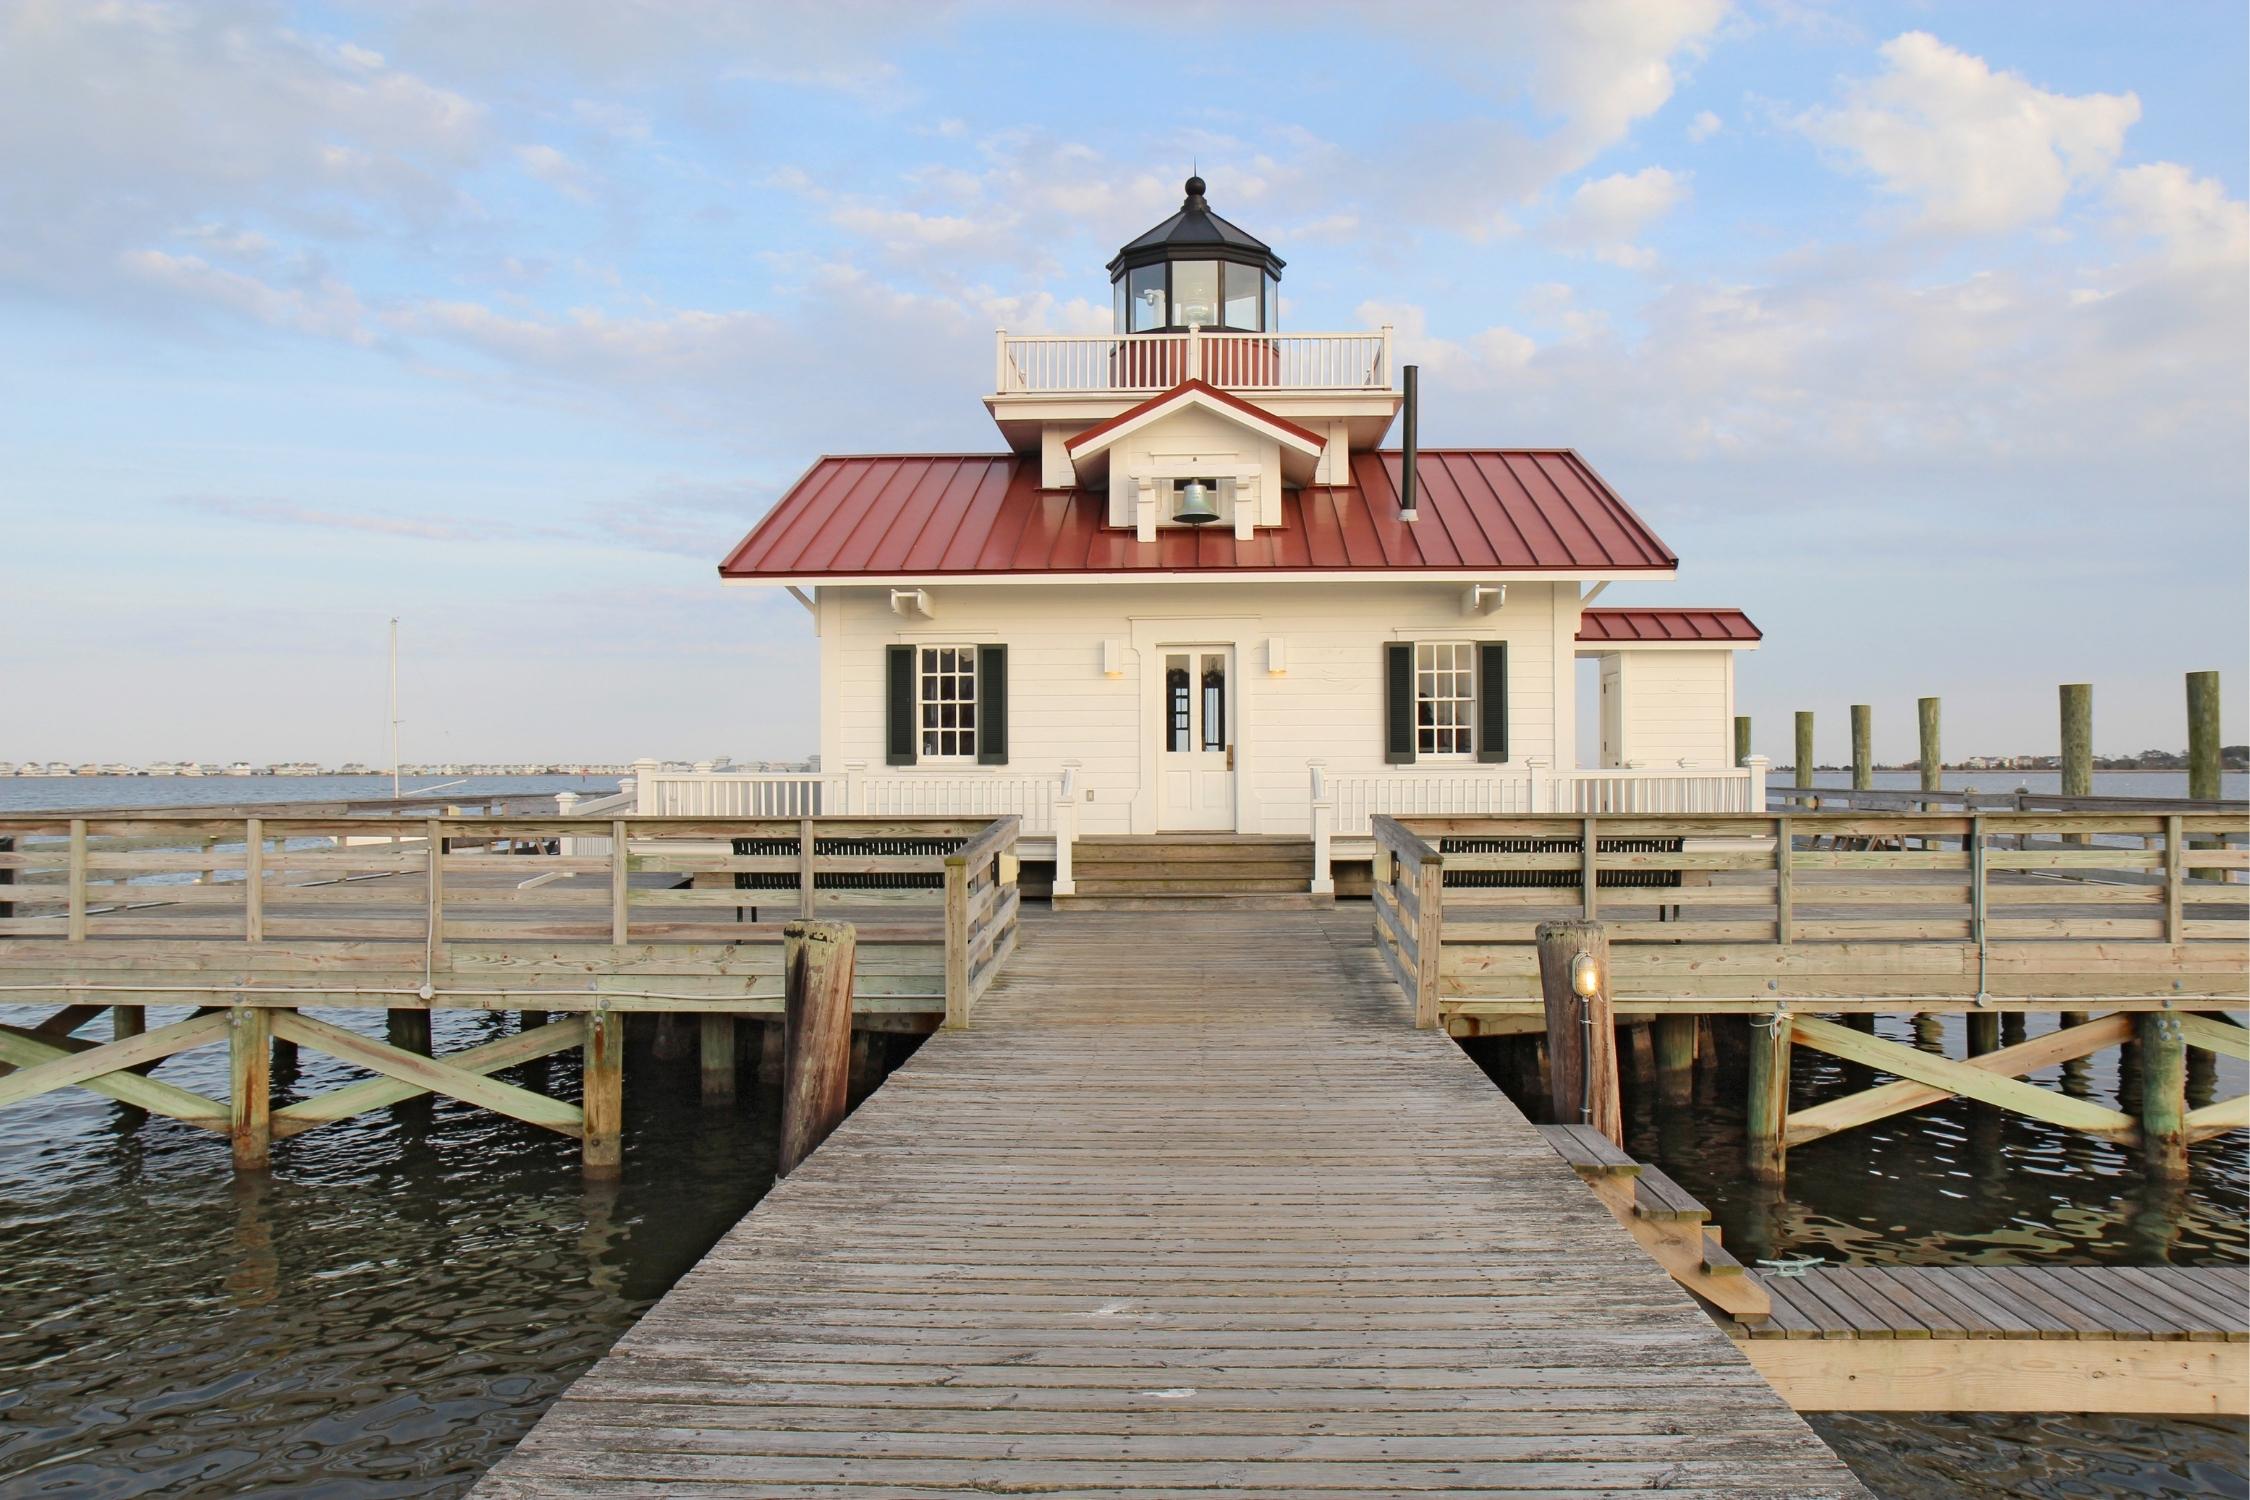 The Roaknoke Marshes Lighthouse